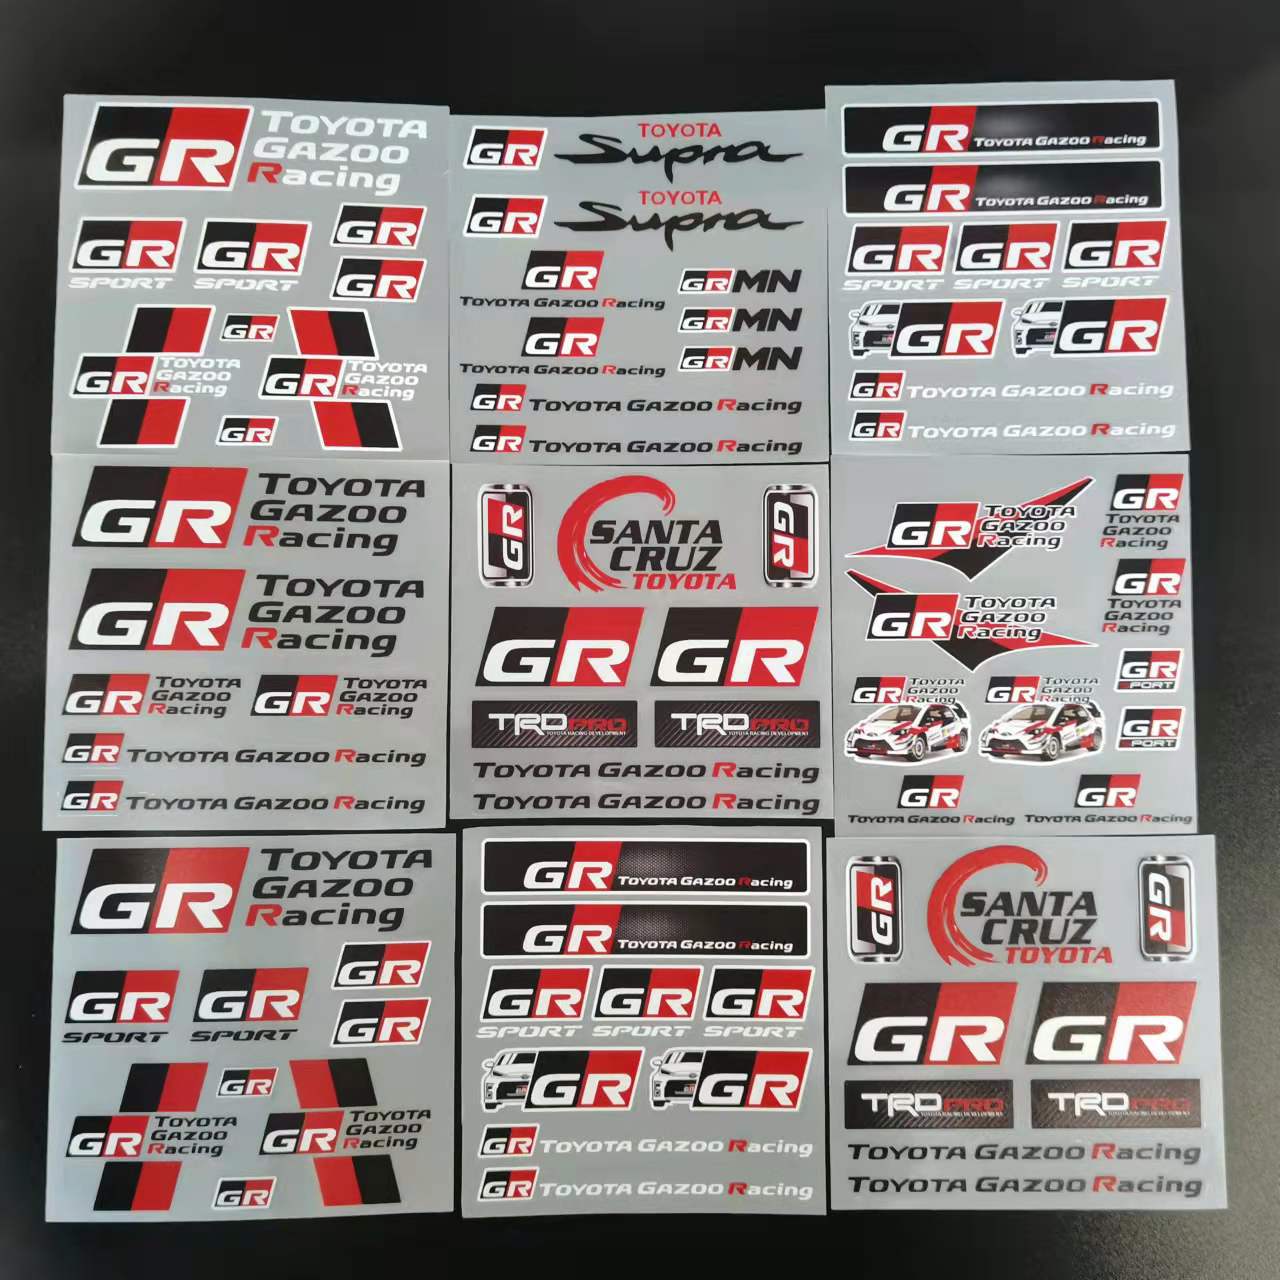 Toyota GR Gazoo Racing Stickers Decals